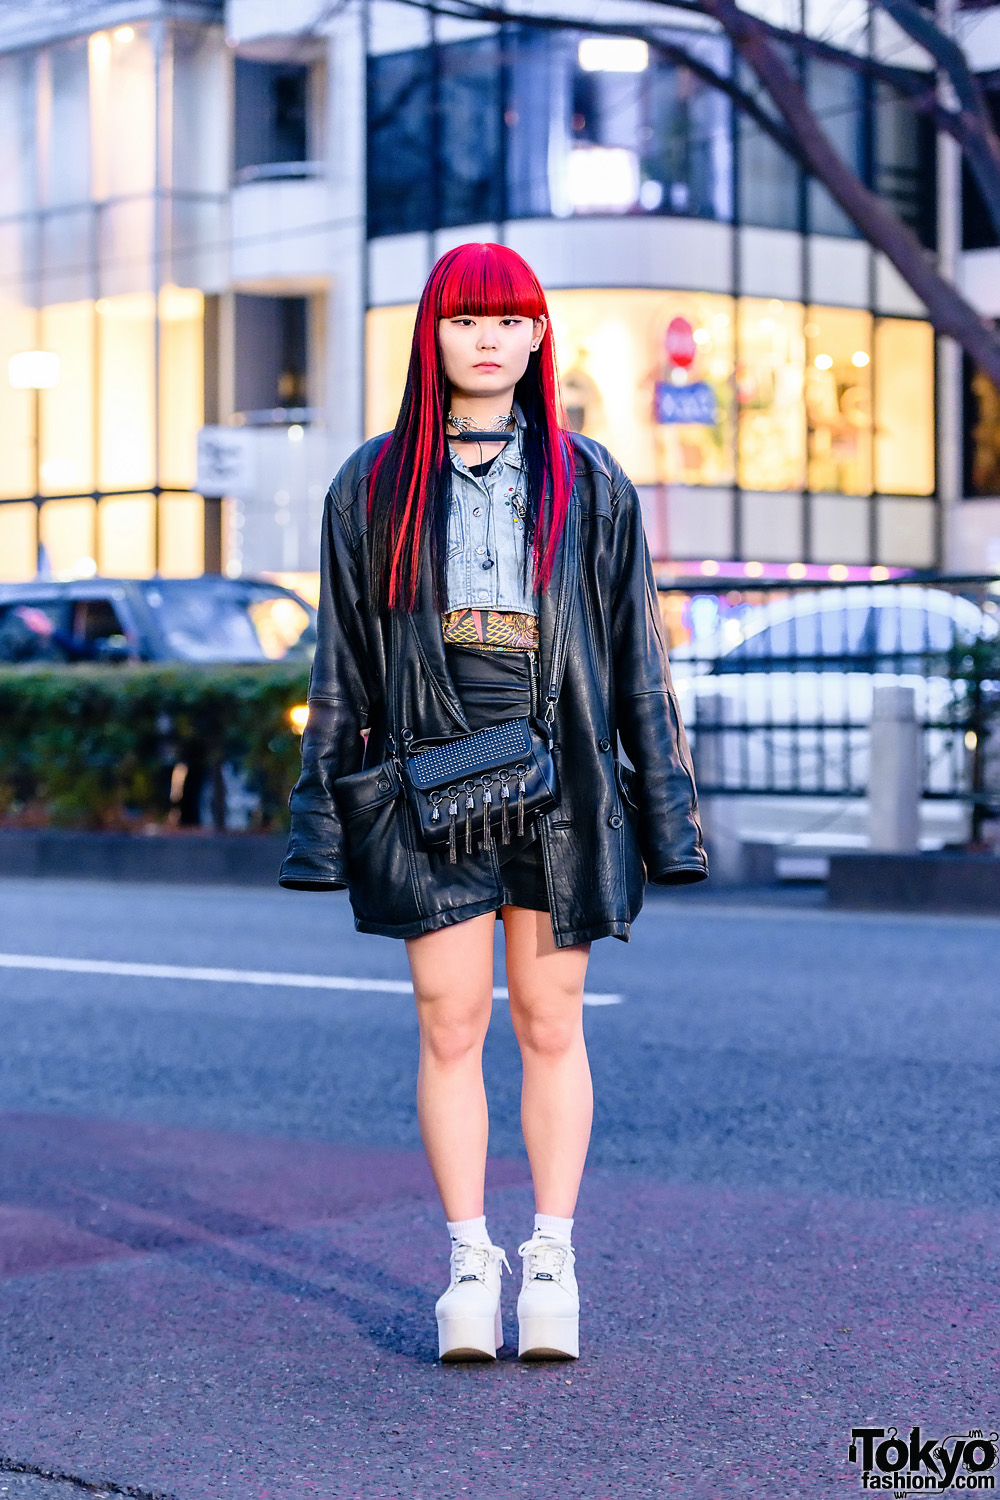 Tokyo Leather Jacket Street Style w/ Red & Black Hair, Skeleton Hands Choker, Denim Vest, Crossbody Bag & Yosuke Platforms